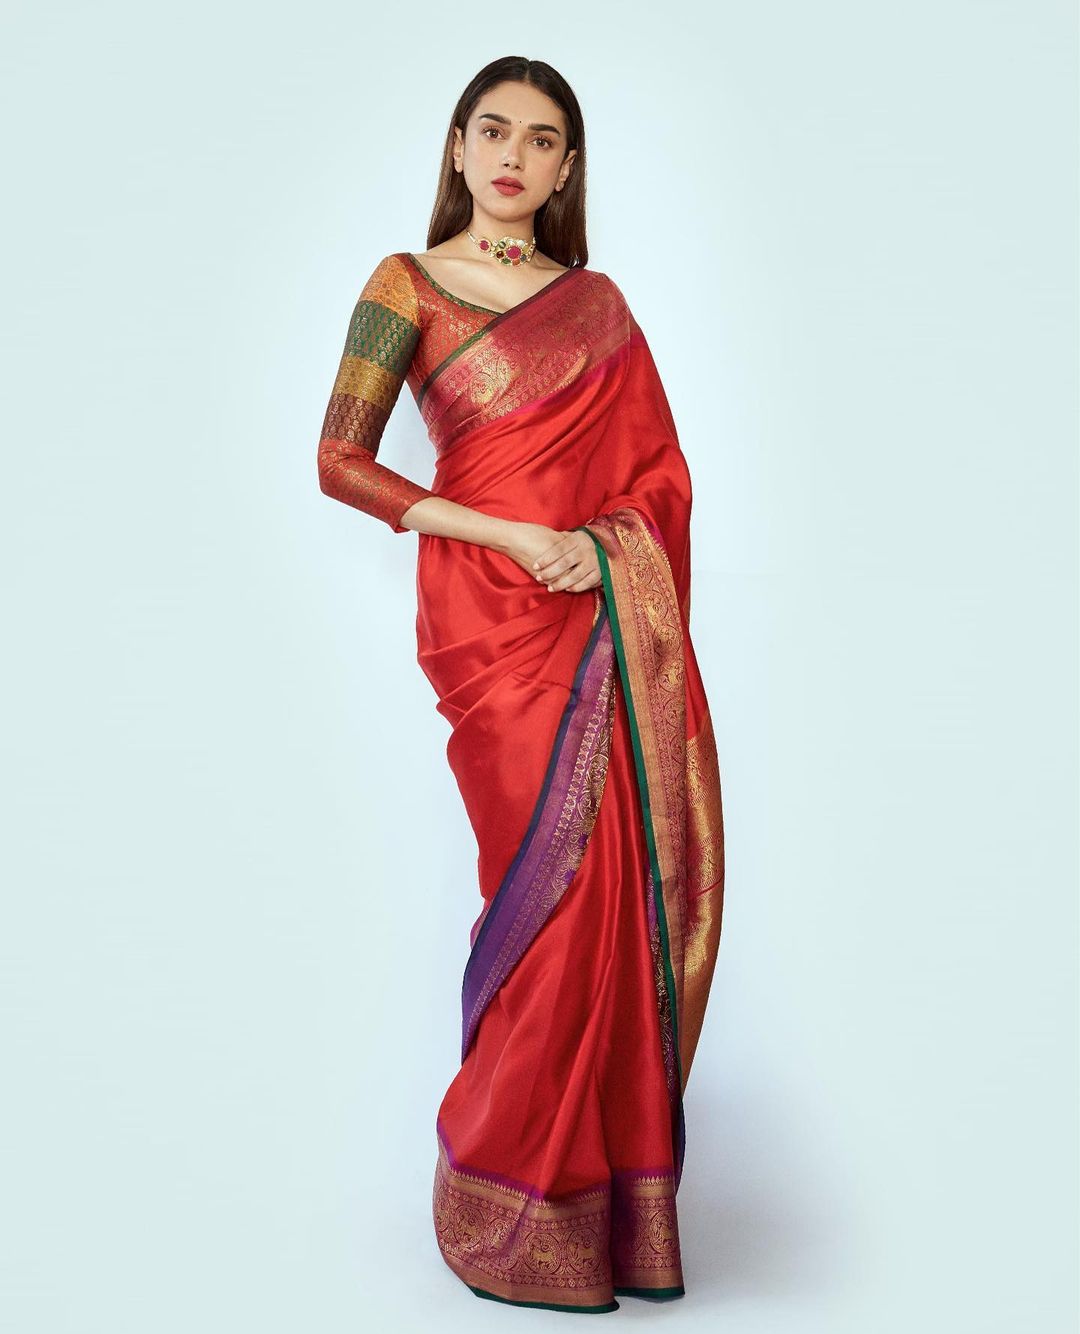 Aditi Rao Hydari makes heads turn in breathtaking sarees | Times of India